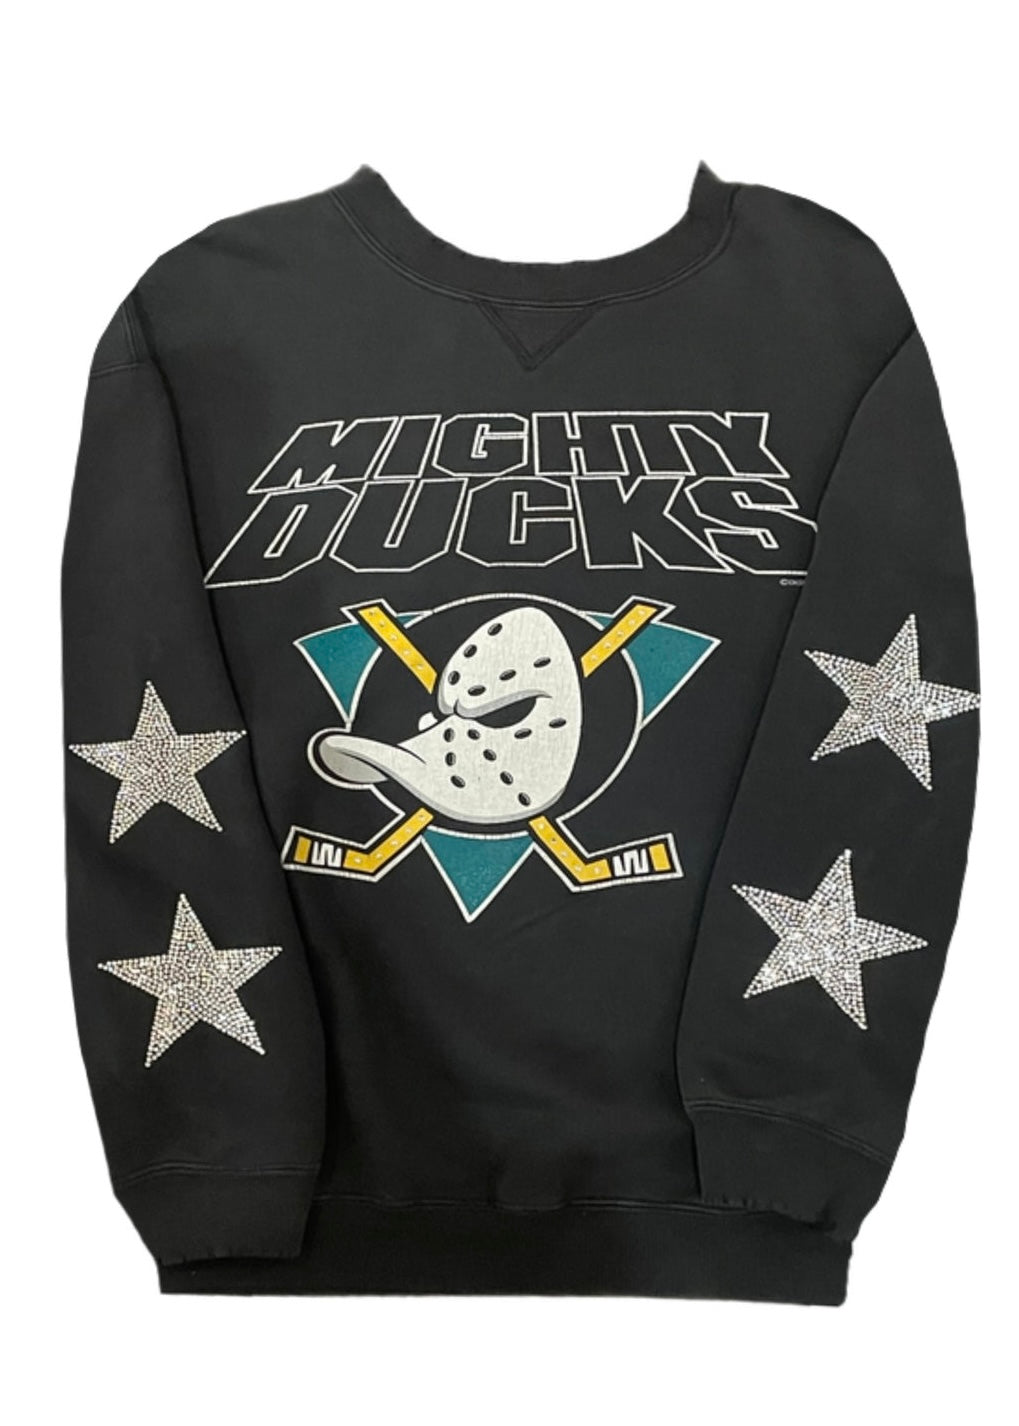 Anaheim Ducks, NHL One of a KIND Vintage “Mighty Ducks” Sweatshirt with Crystal Star Design - Size: Medium